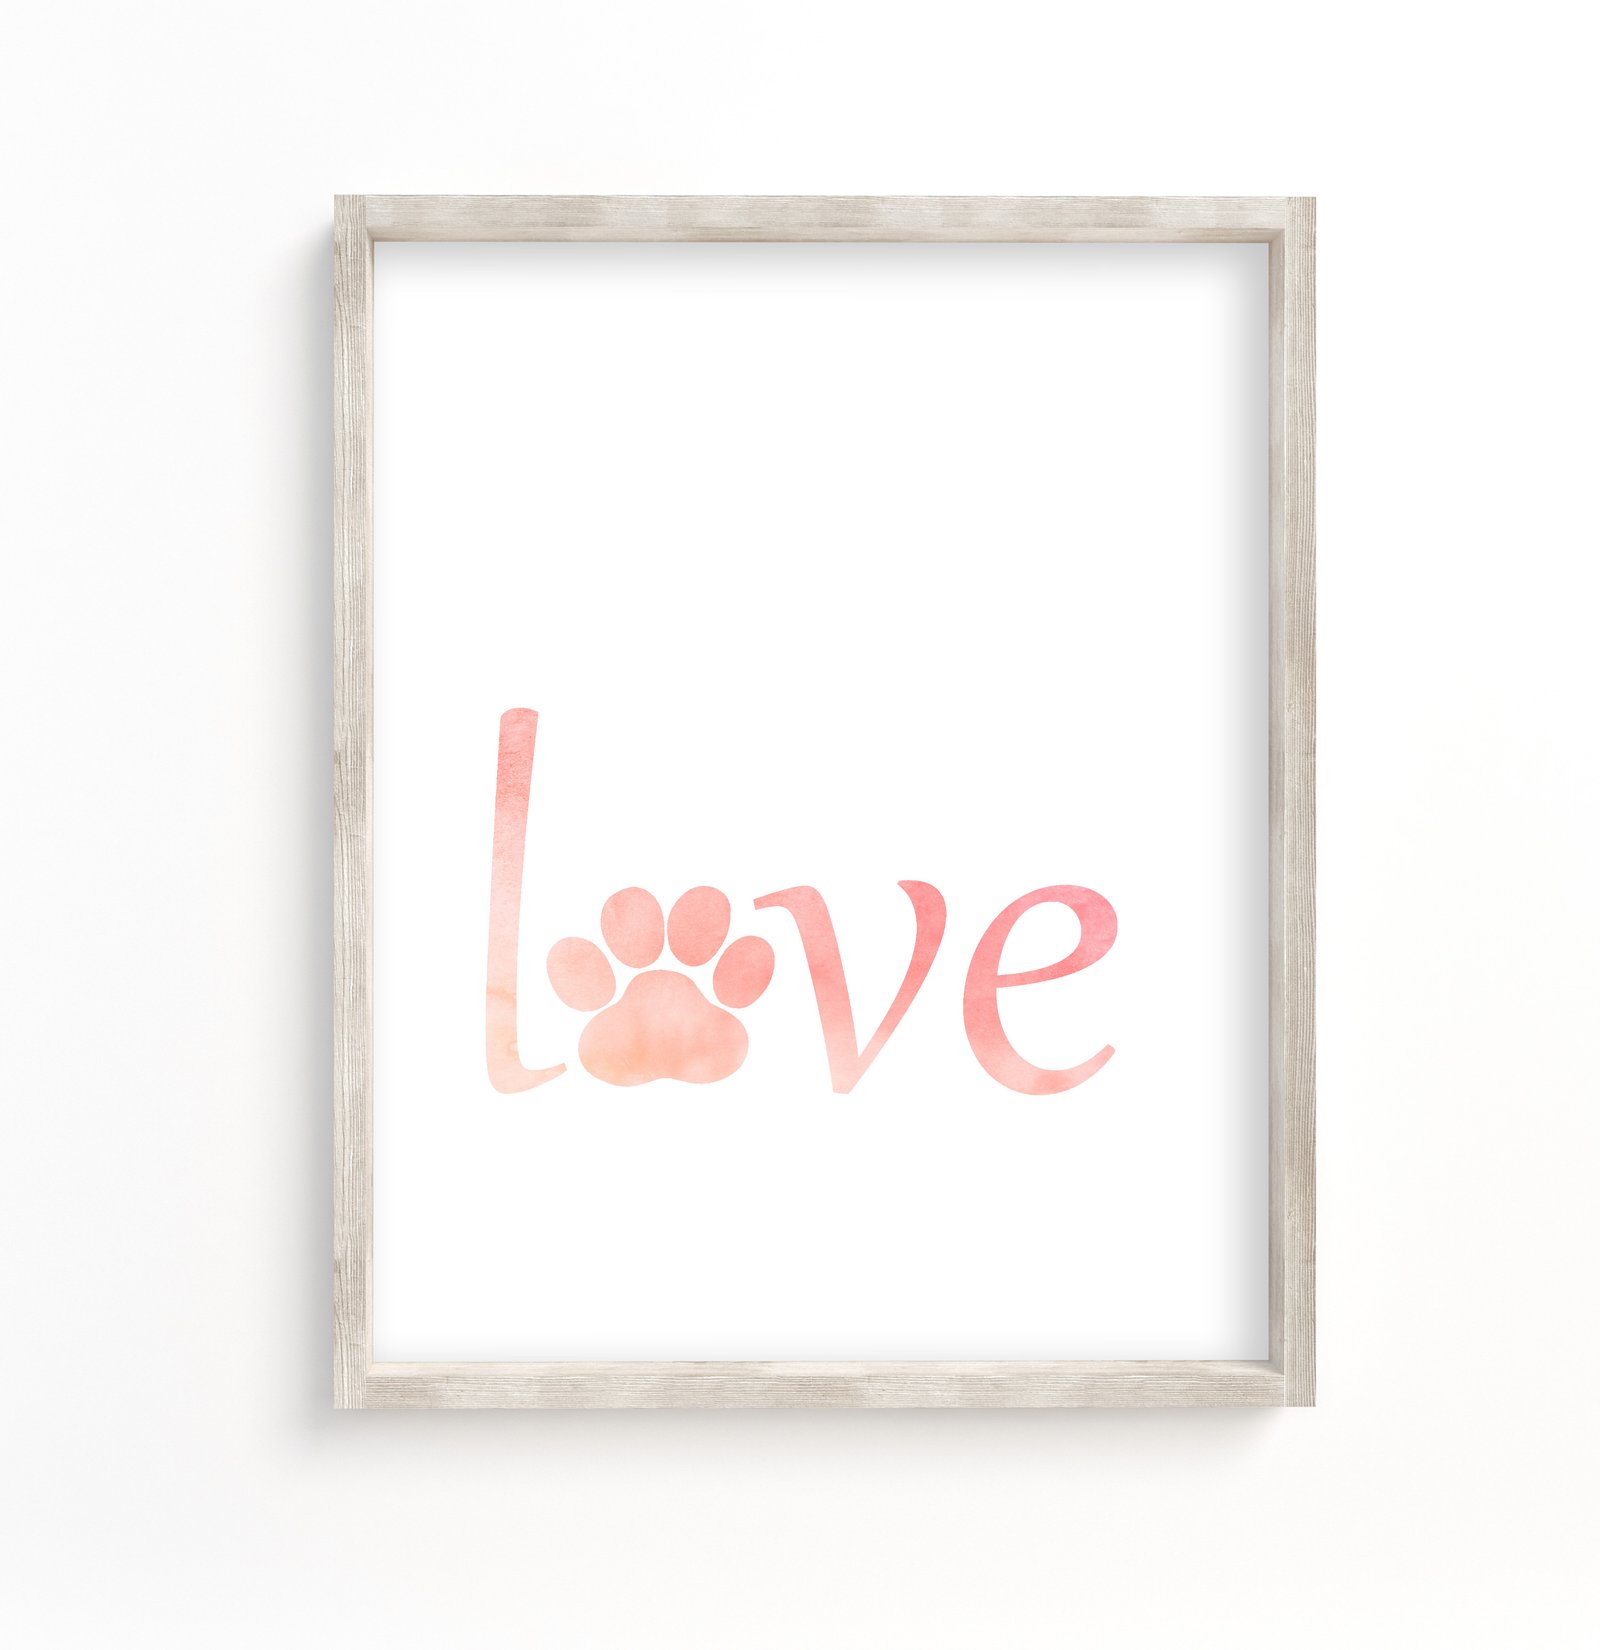 pink love art print, the o in love looks like a dog paw print